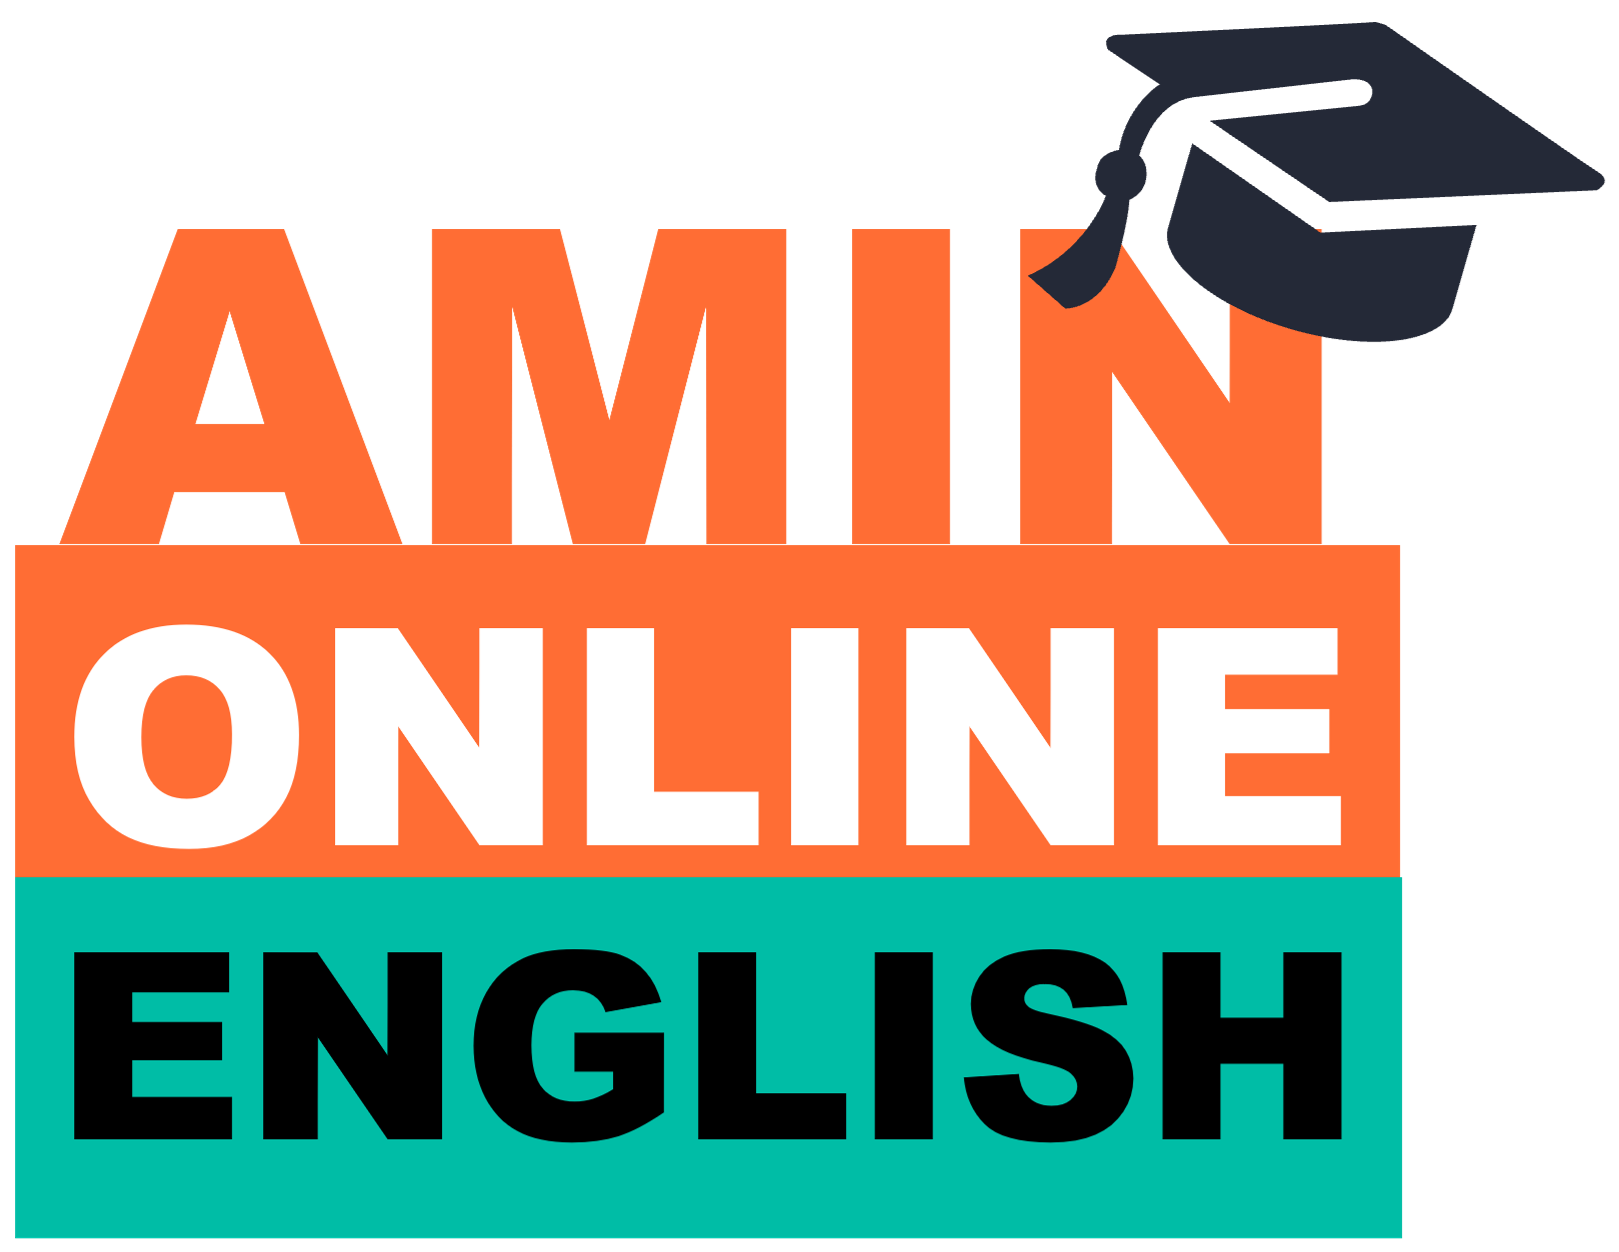 Amin Online English Logo